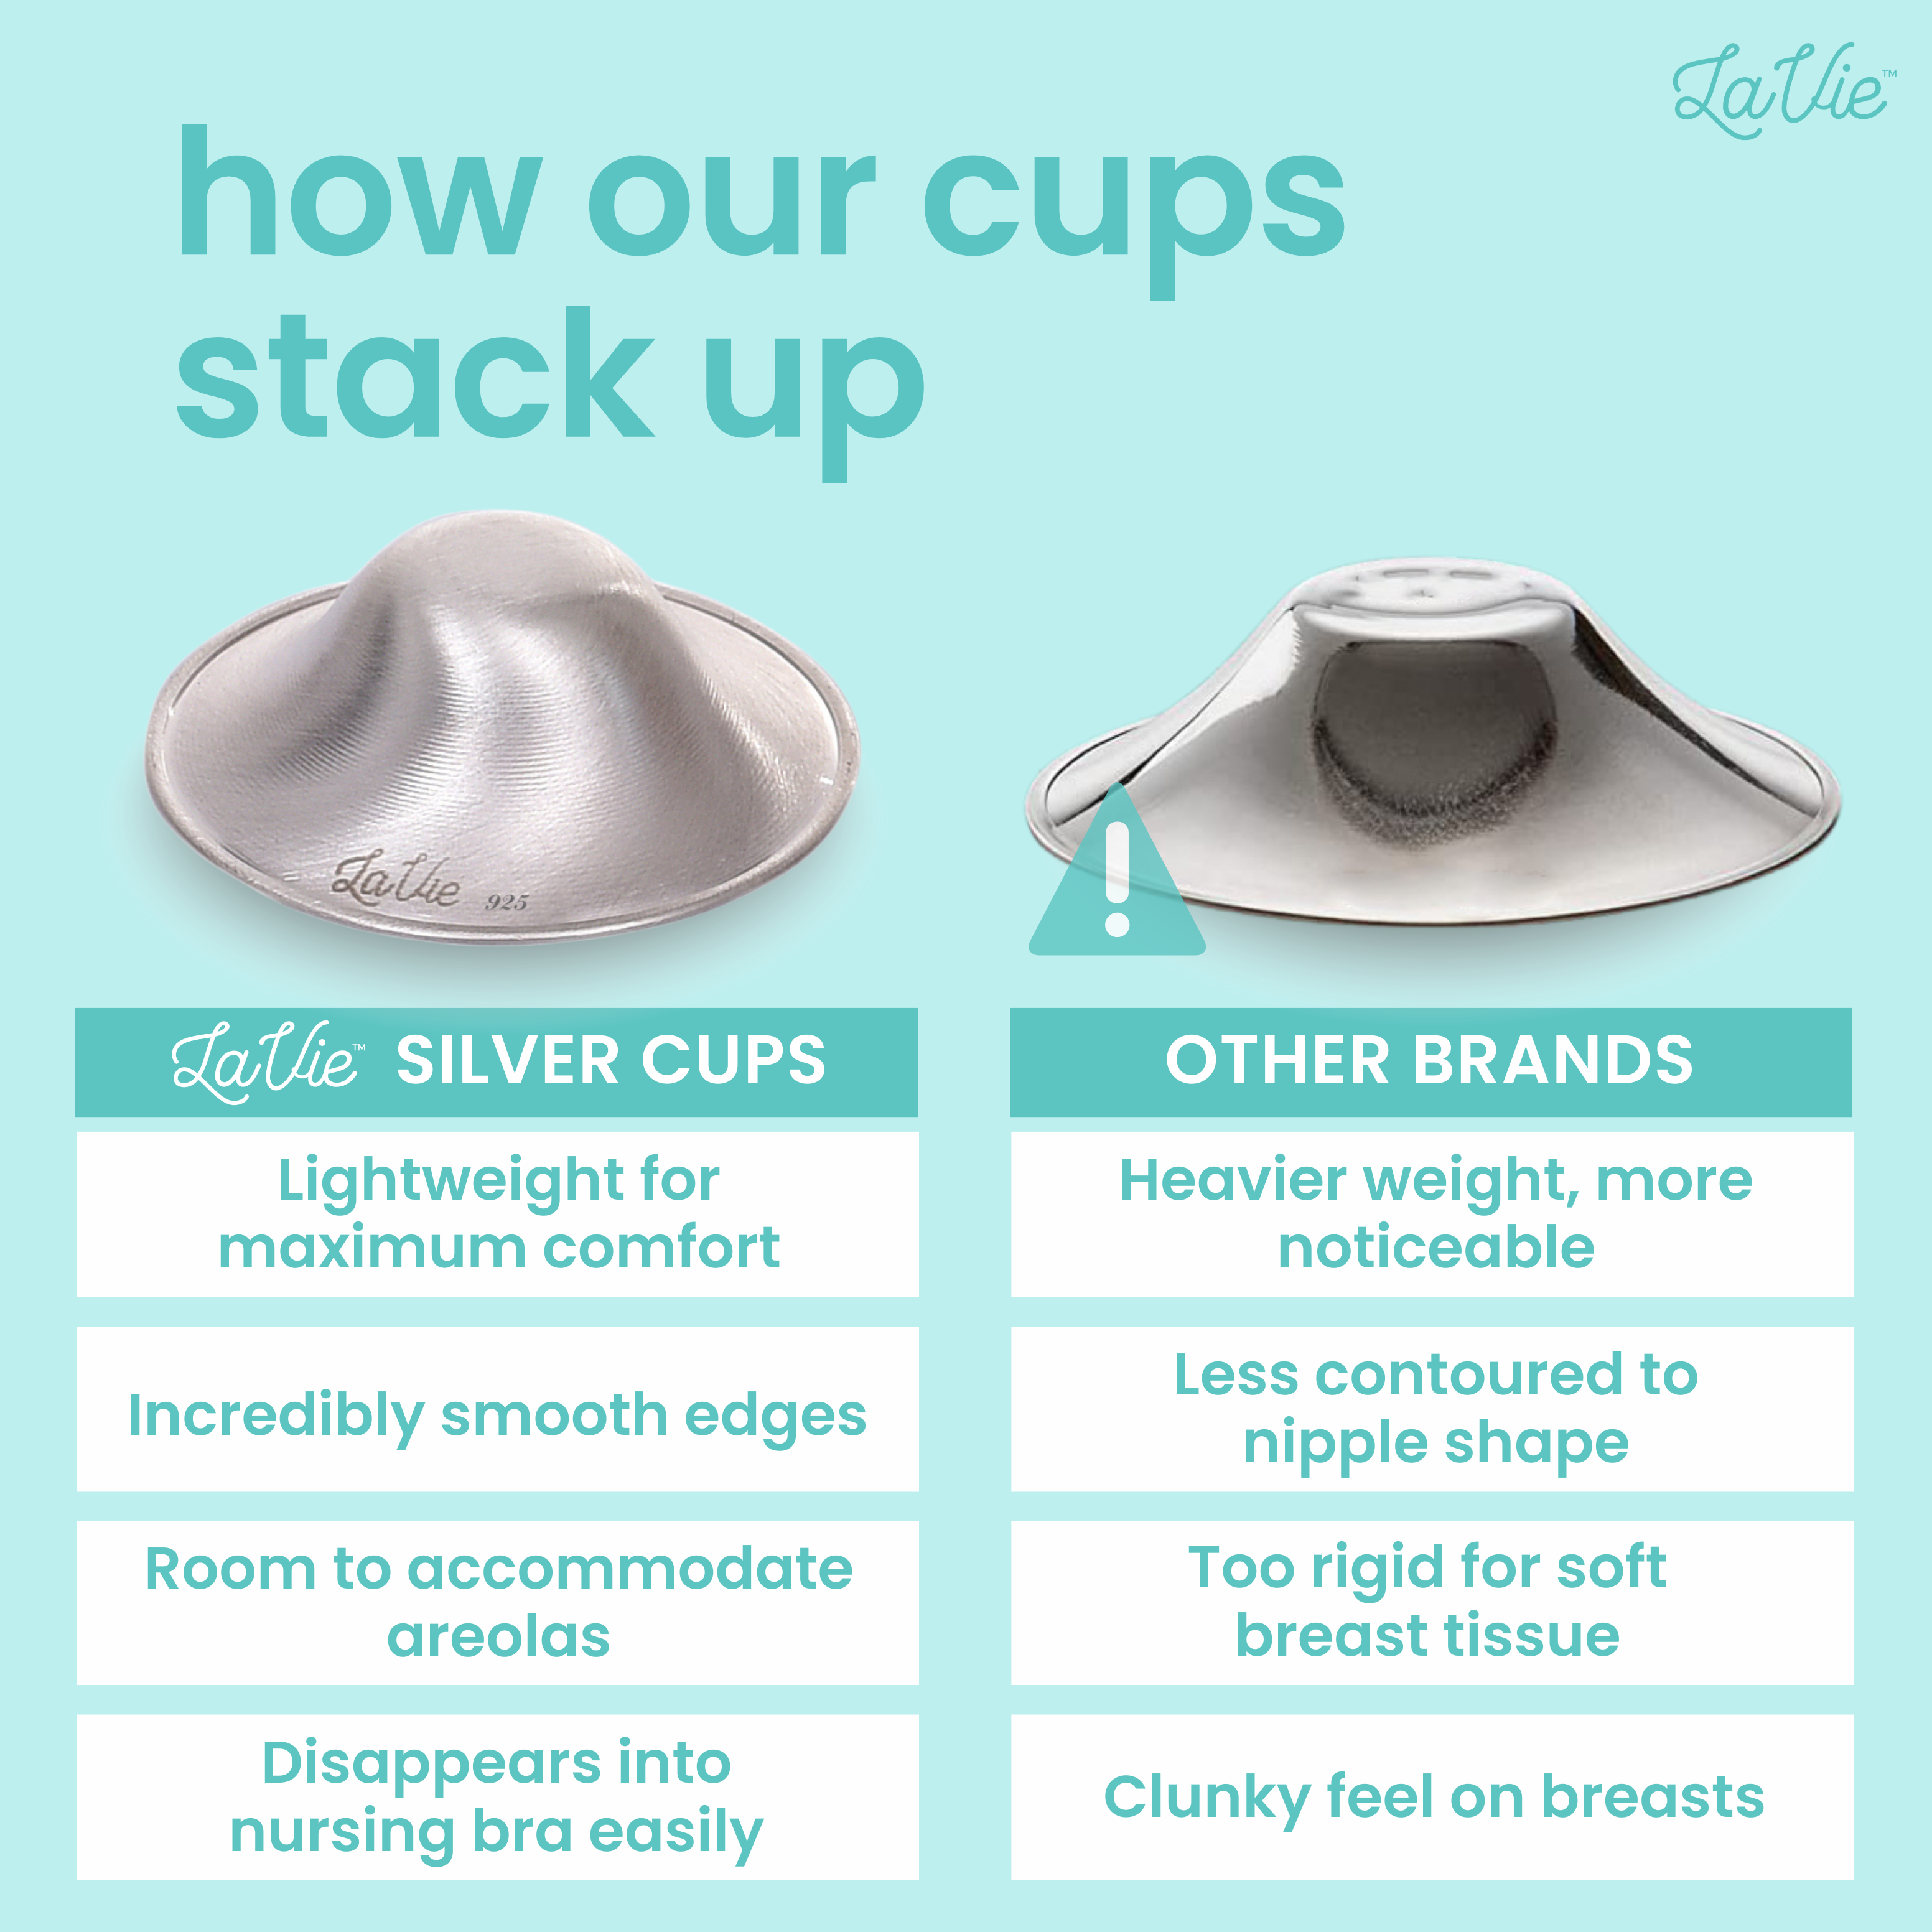 LaVie Silver Nursing Cups